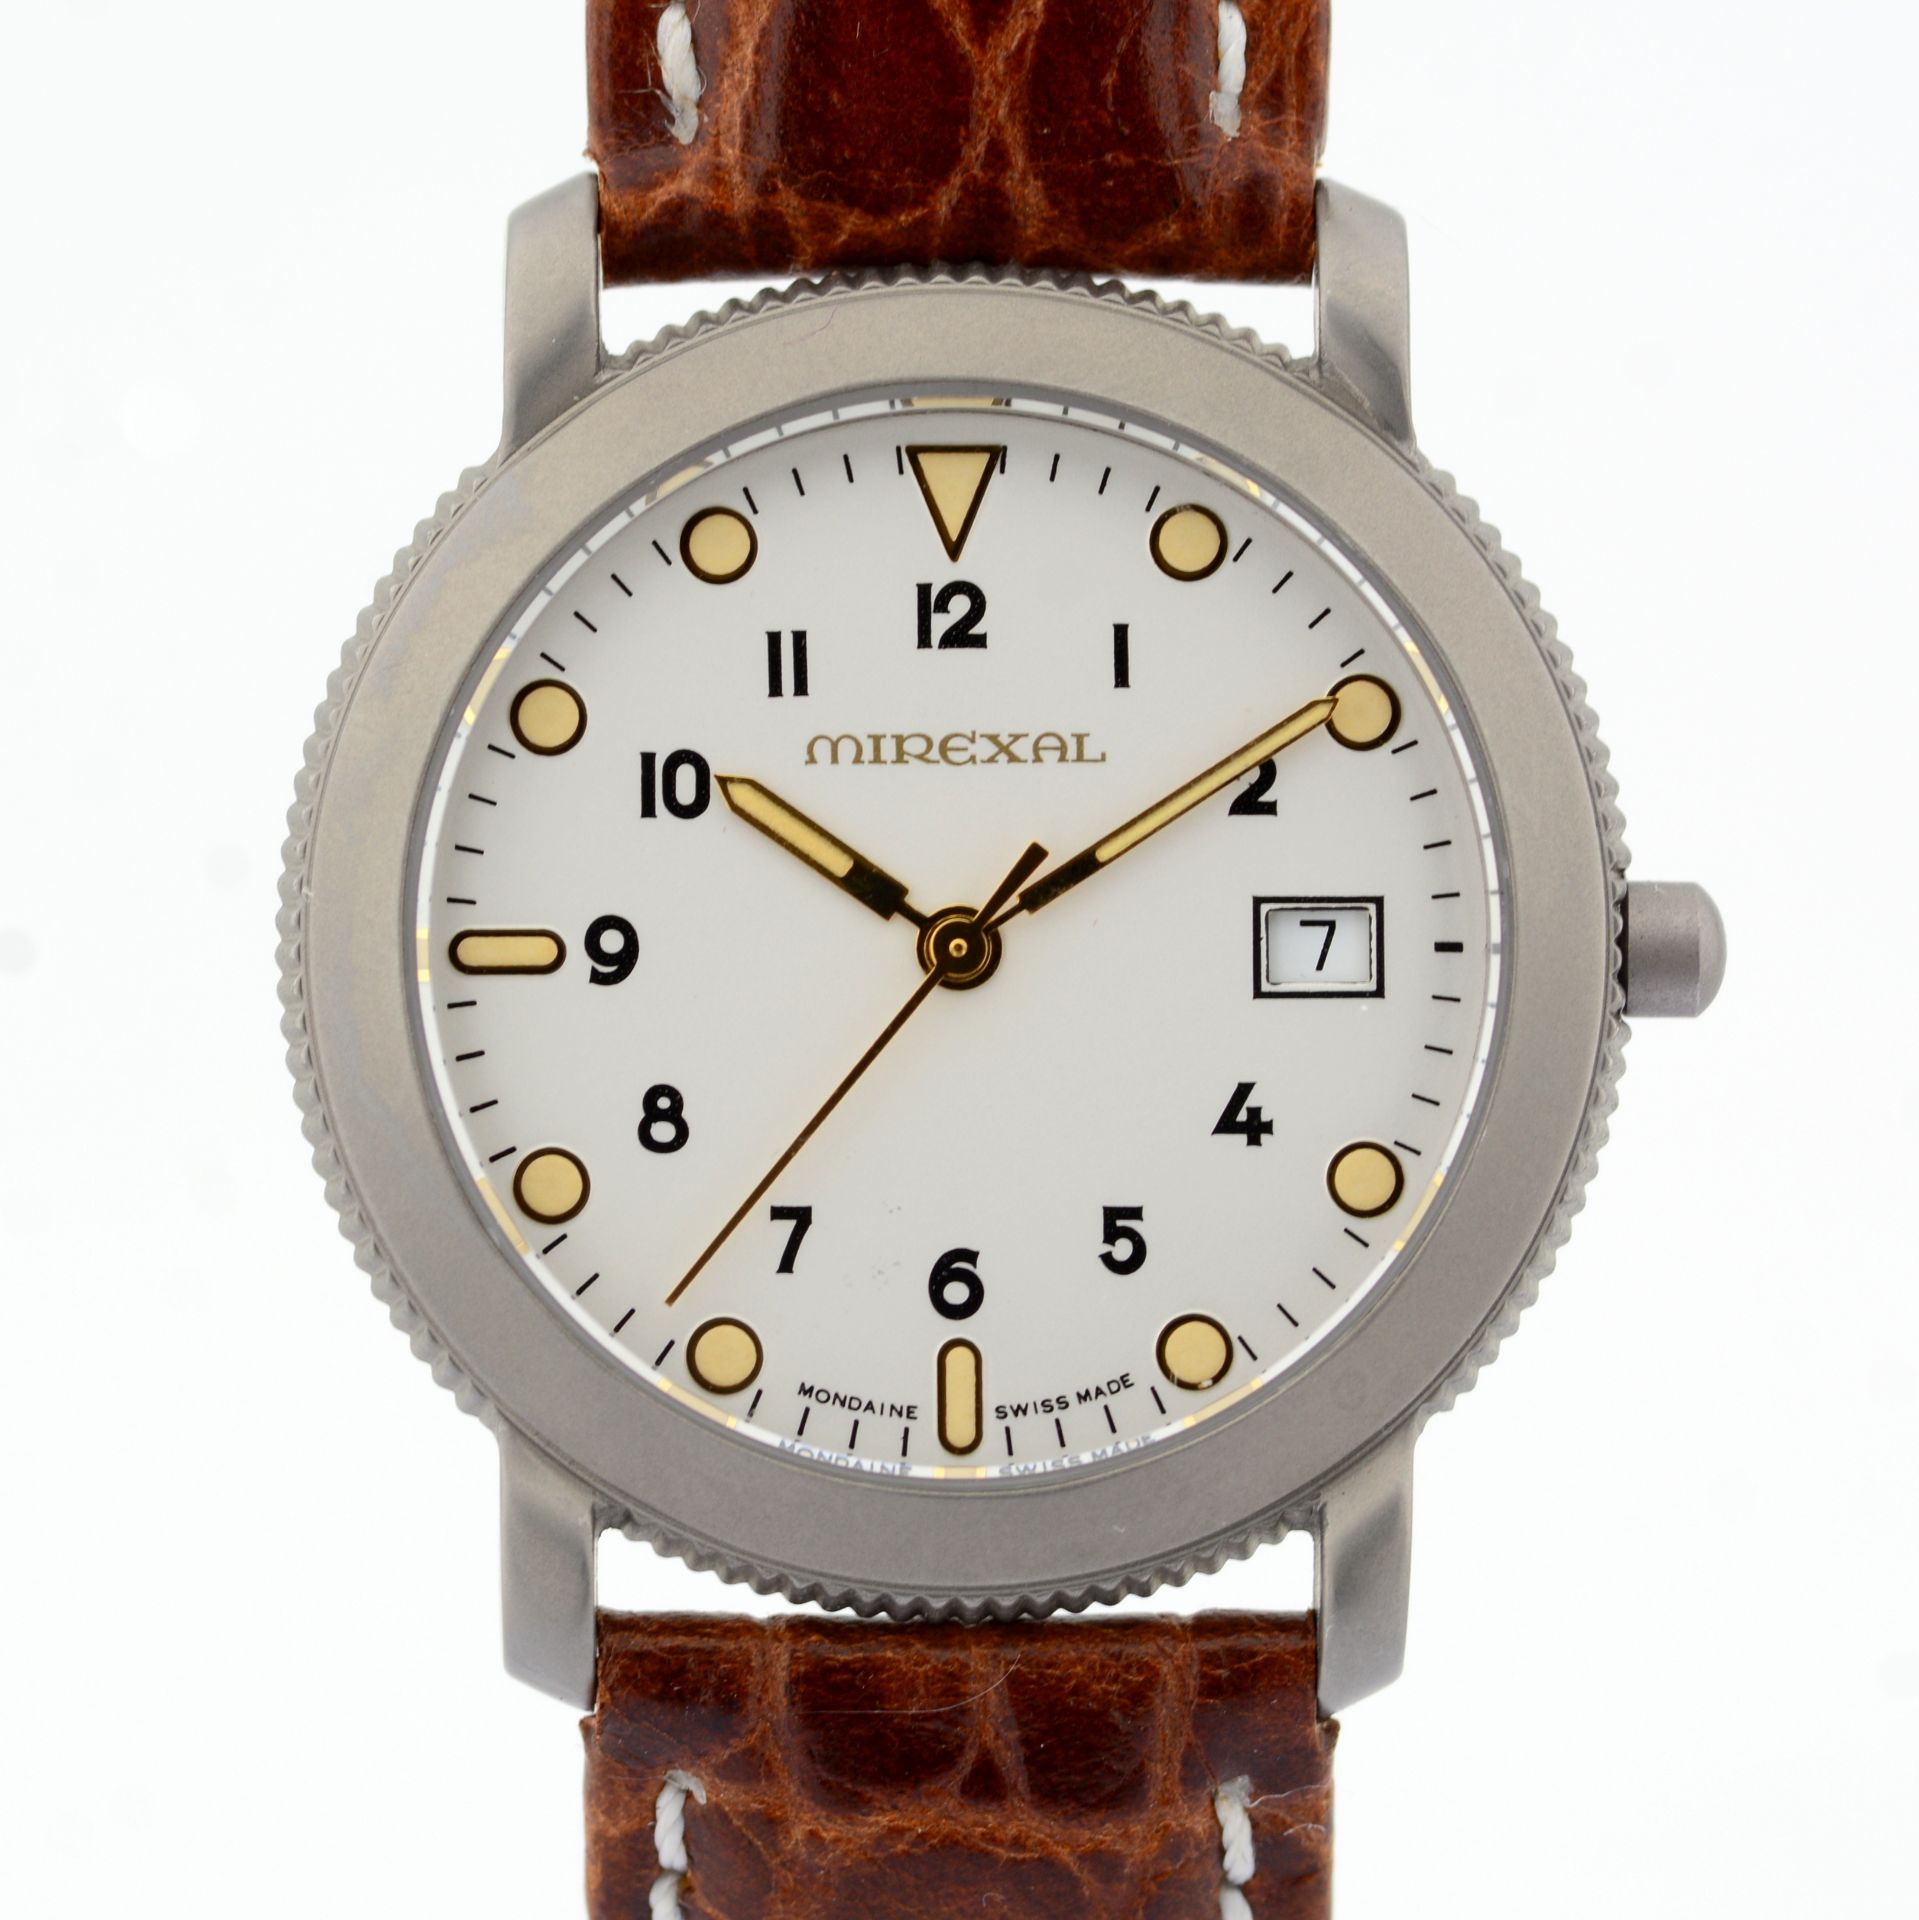 Mondaine / Mirexal Date - (Unworn) Gentlmen's Titanium Wrist Watch